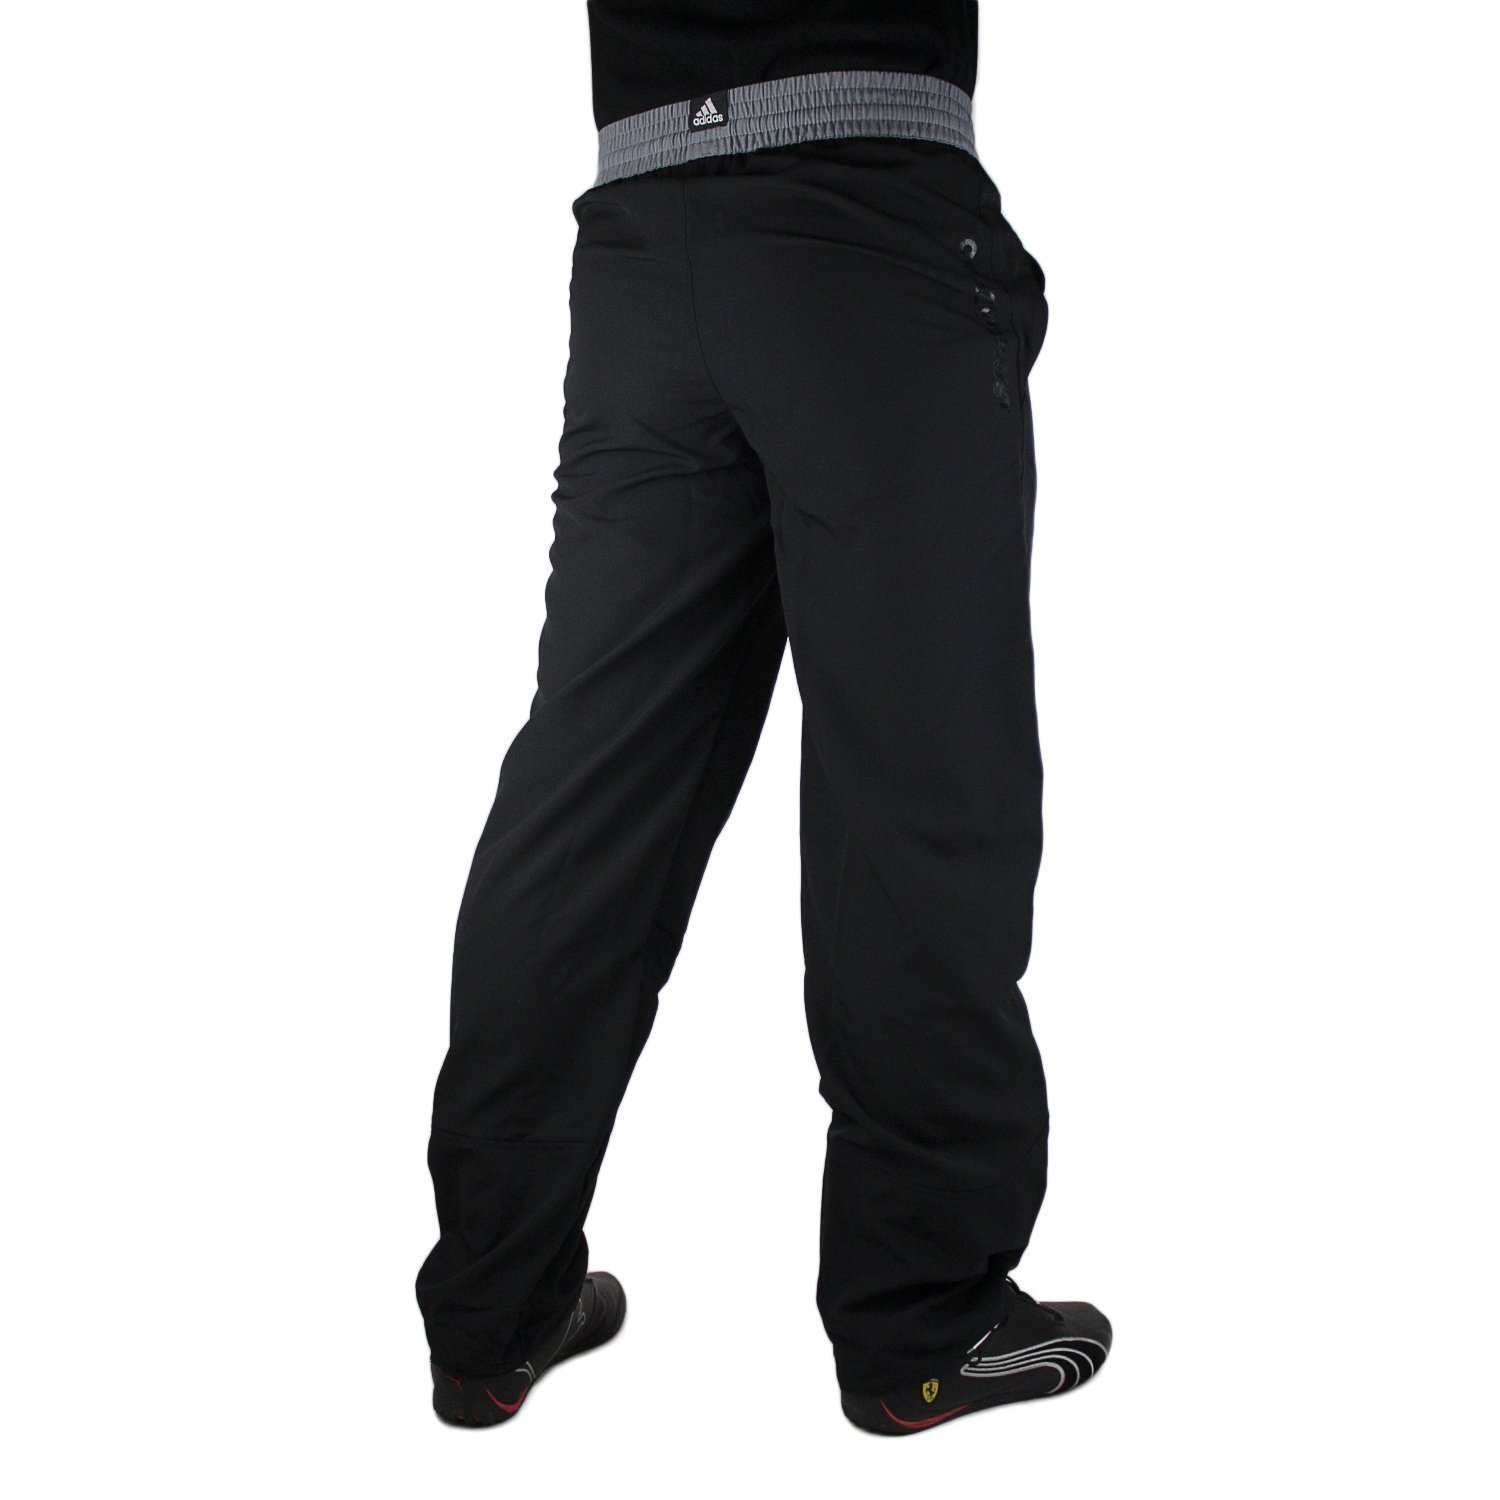 Adidas CrazyGhost Pants - Black/Grey (Mens) - image 2 of 2